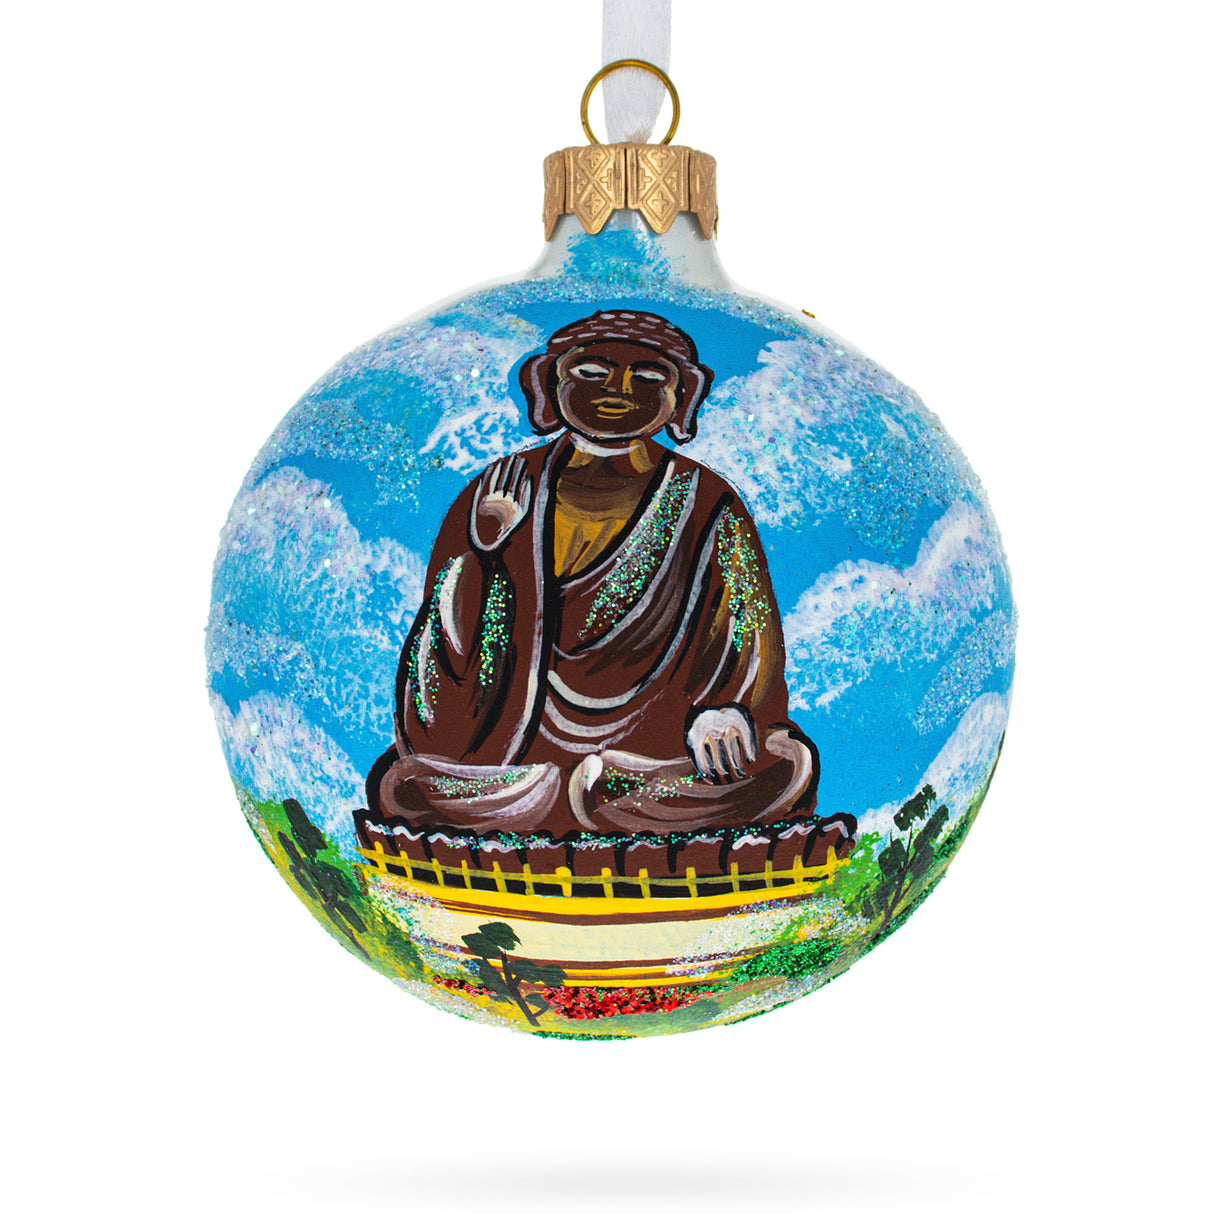 Glass Tian Tan Buddha (Big Buddha), Hong Kong Glass Ball Christmas Ornament 3.25 Inches in Multi color Round